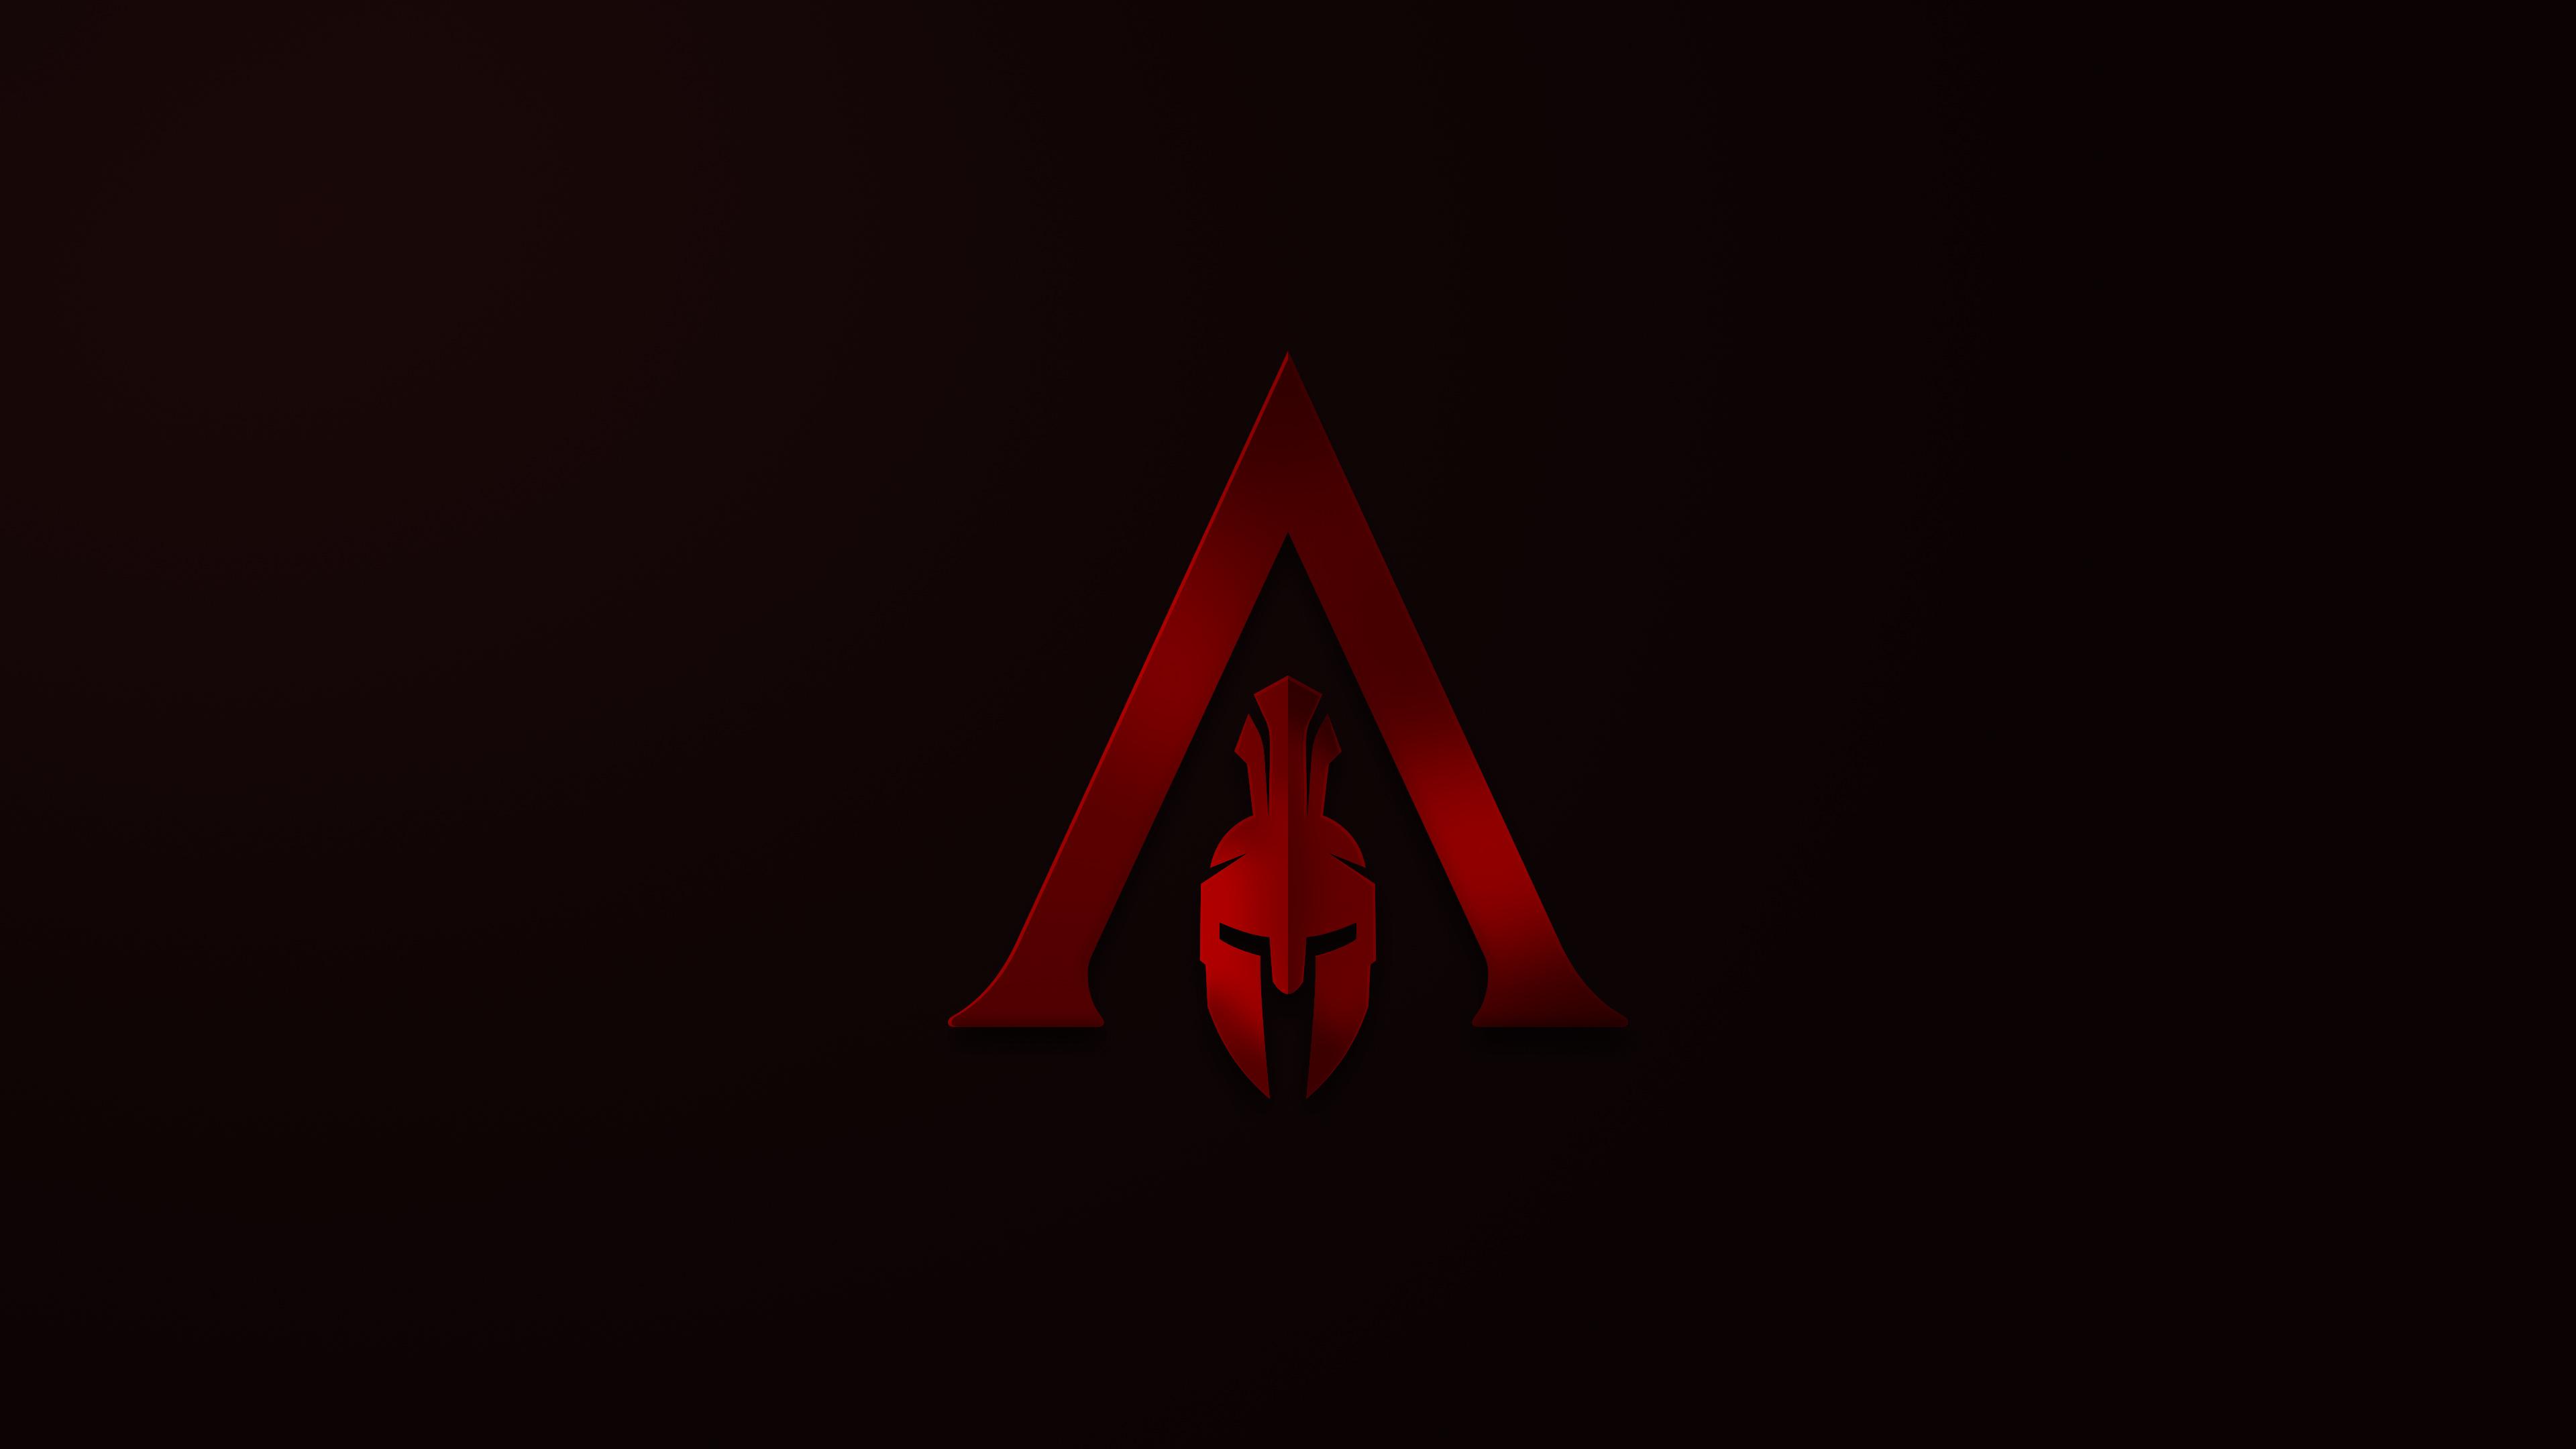 Wallpapers 4k Assassins Creed Odyssey Minimalism Logo 4k 2018 games wallpapers, 4k